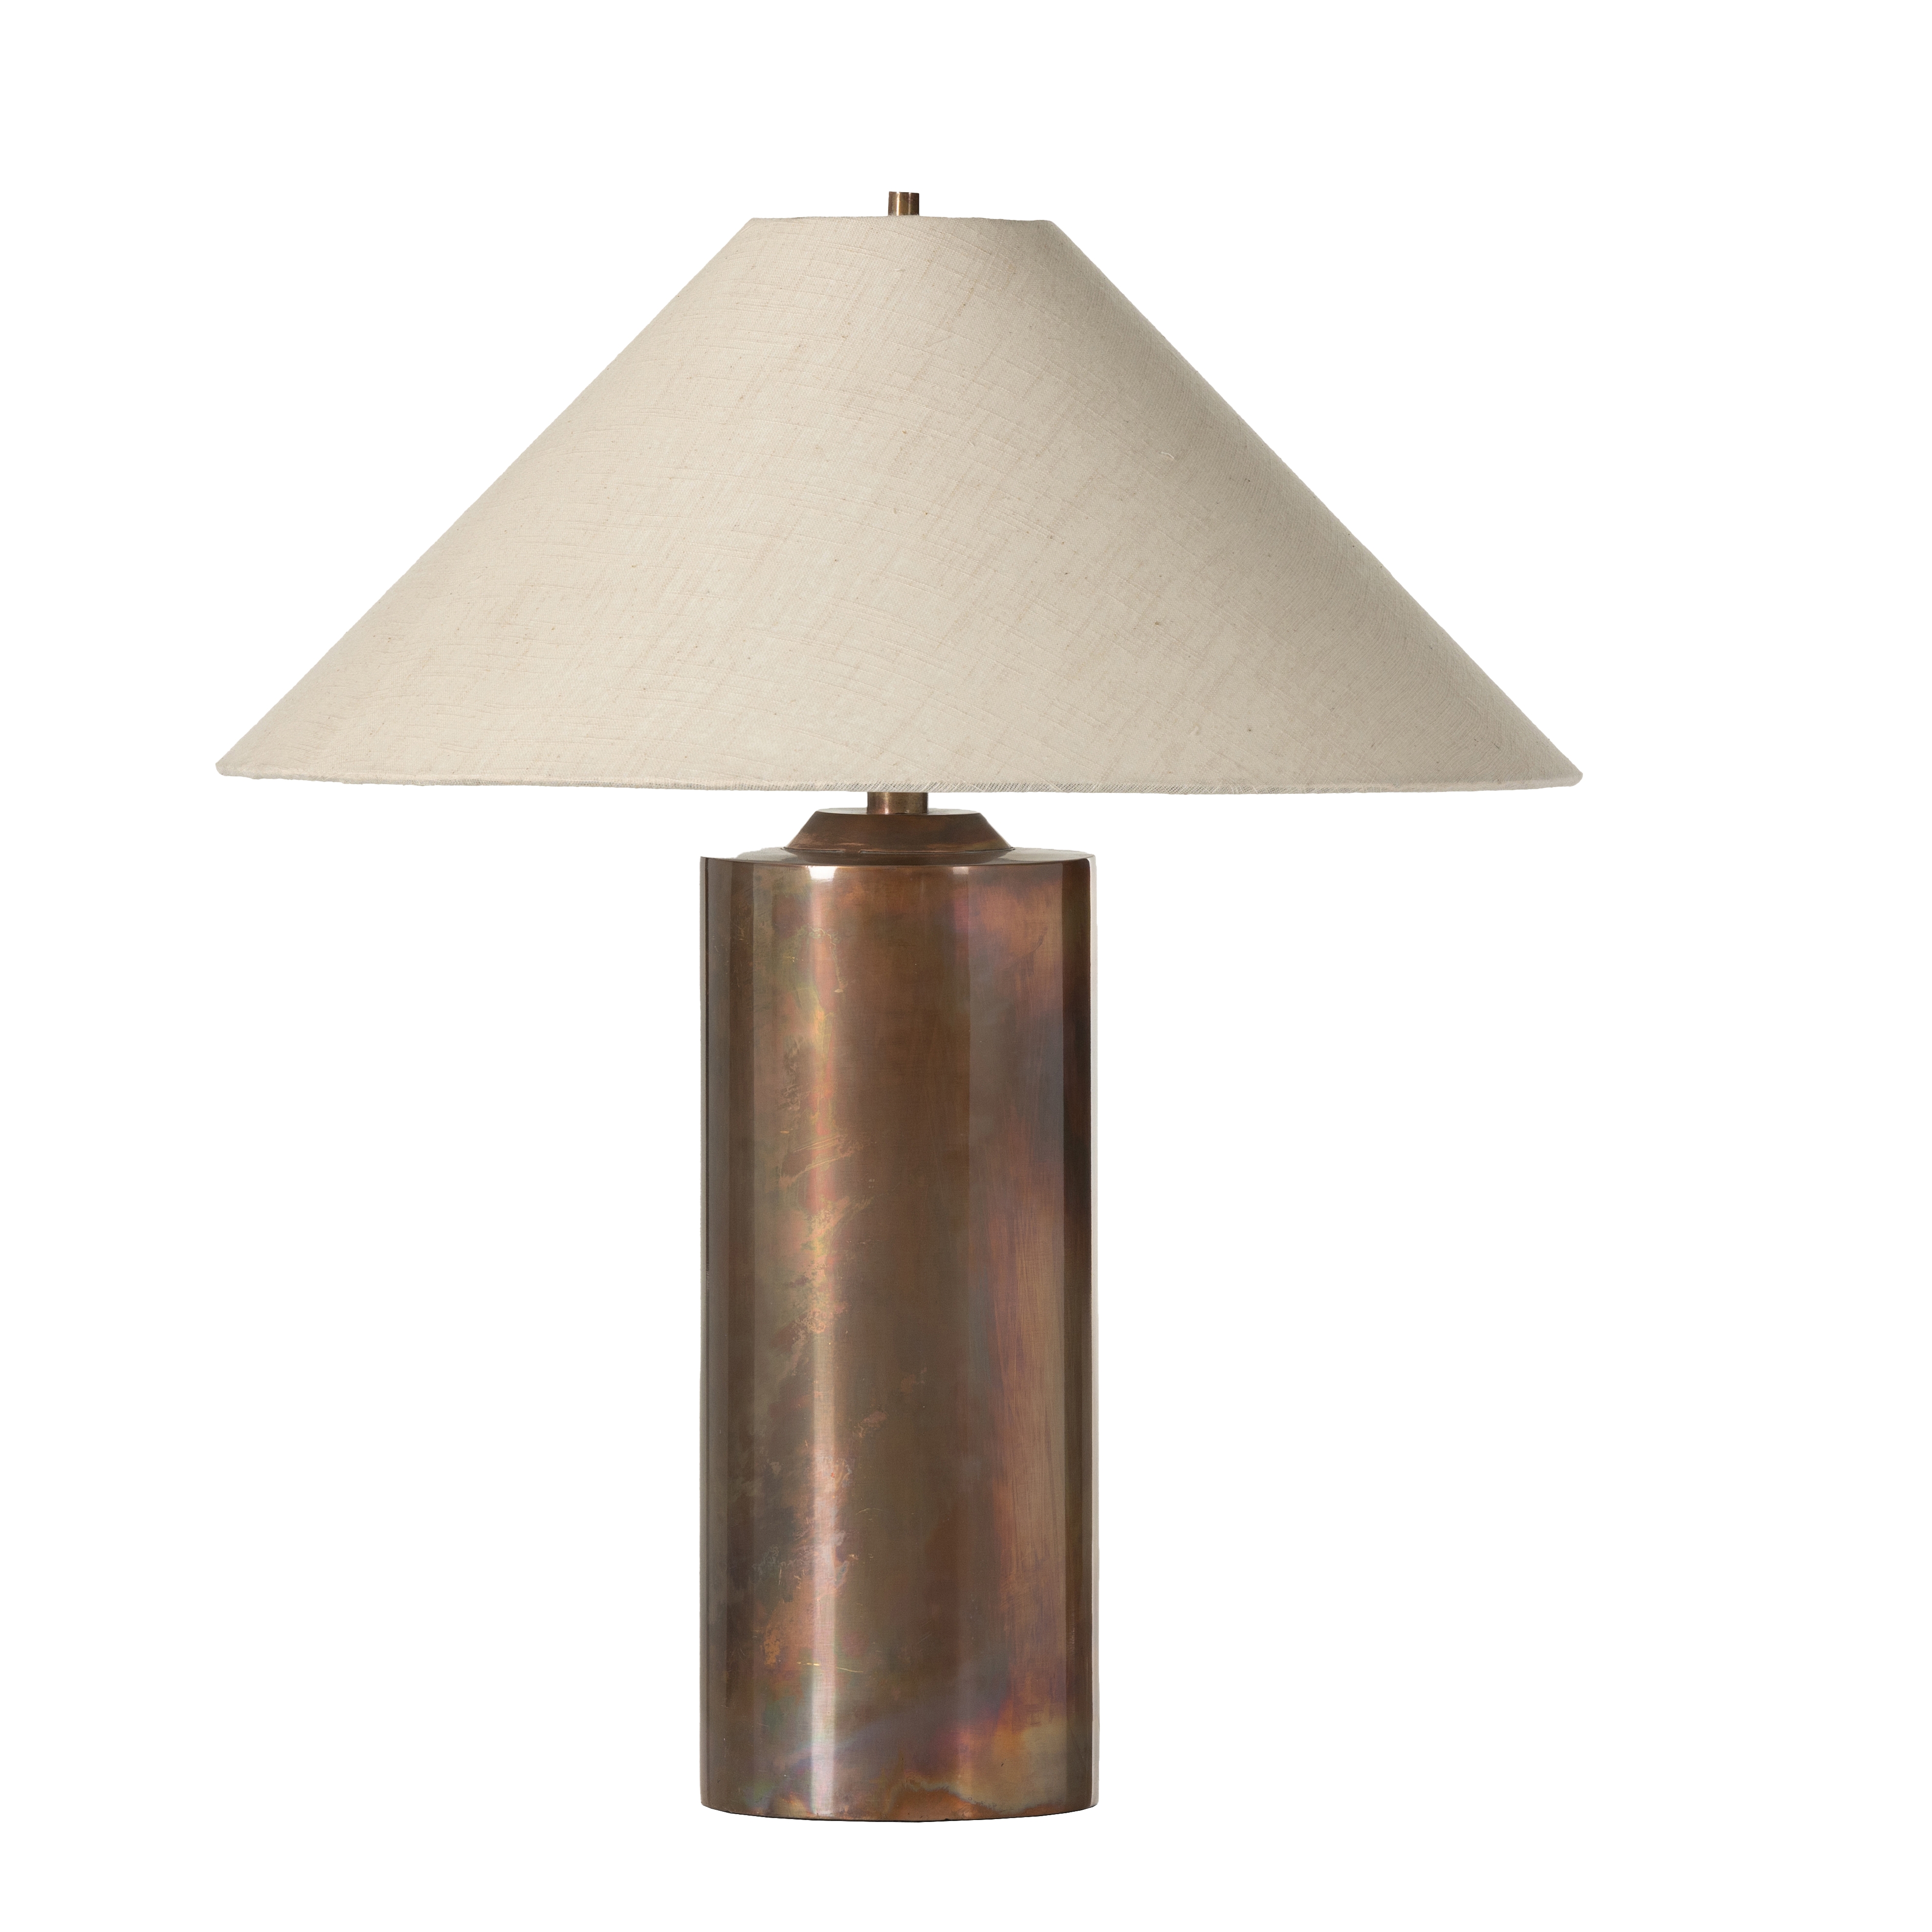 Seaton Table Lamp-Iridescent Acid Wash - Image 0